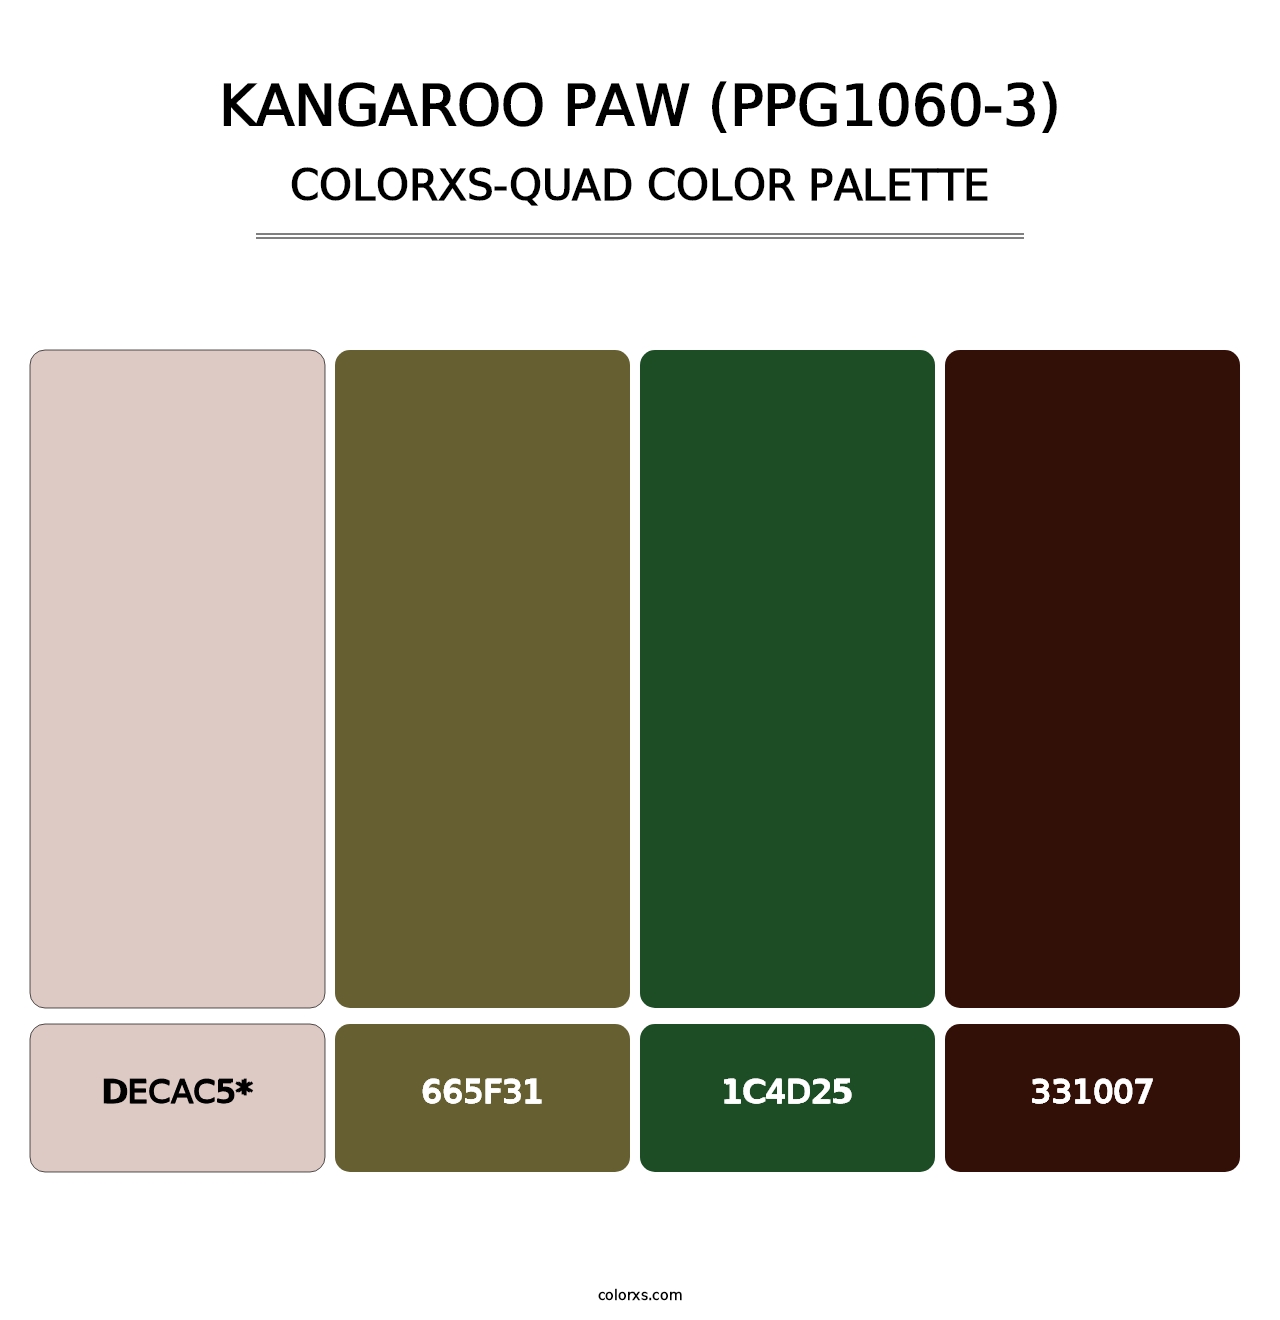 Kangaroo Paw (PPG1060-3) - Colorxs Quad Palette